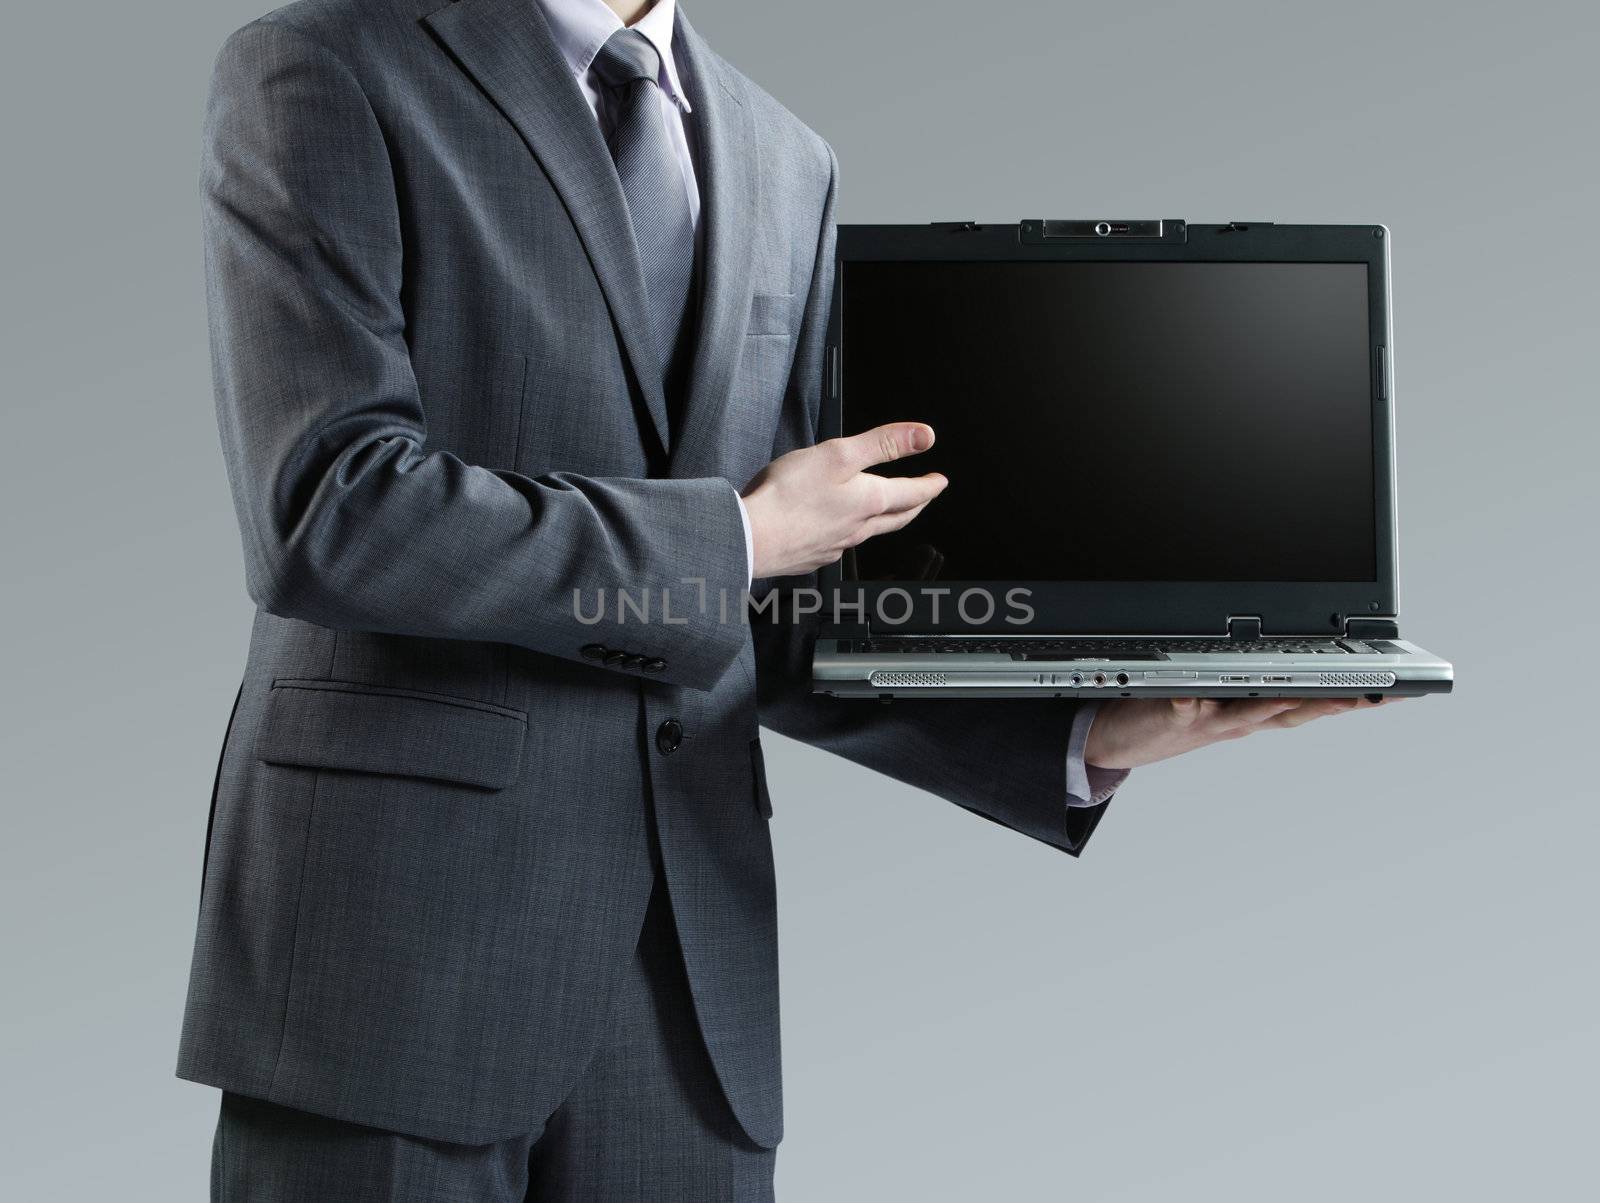 Businessman holding his laptop